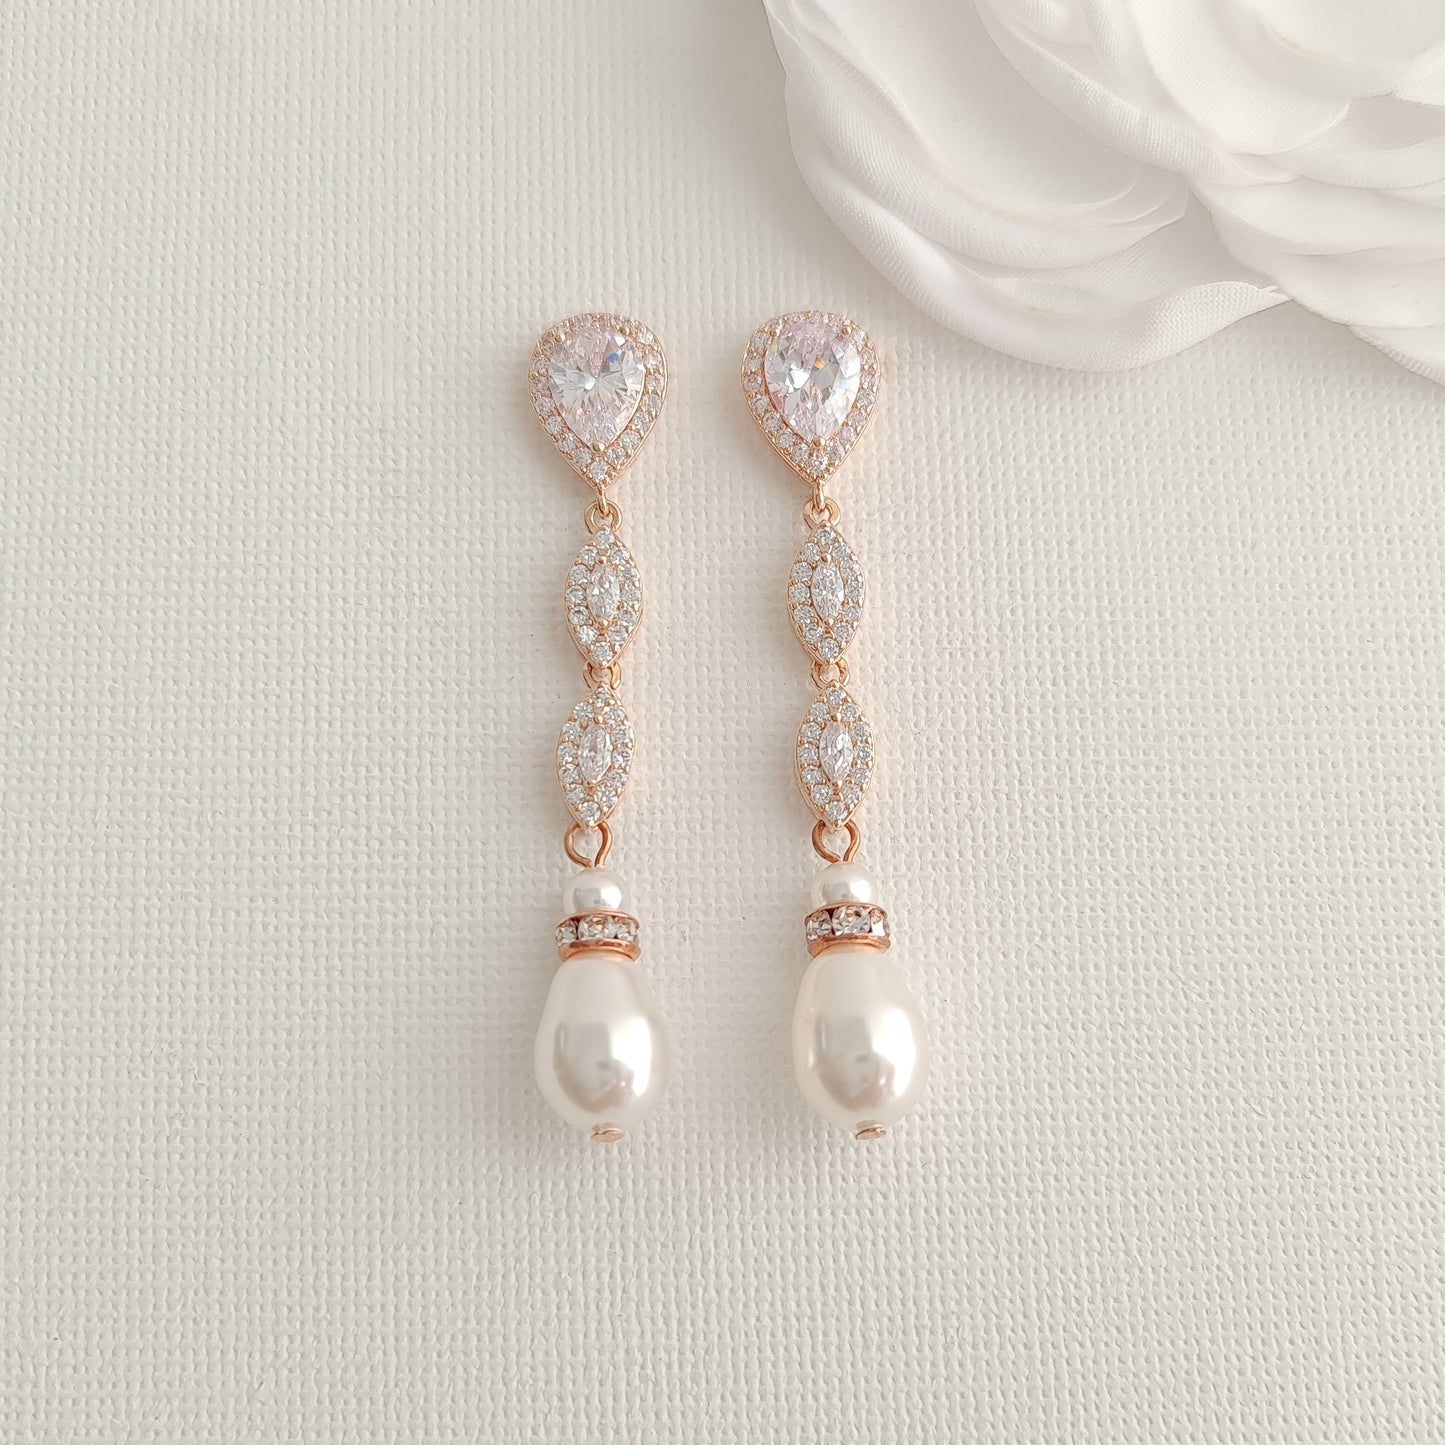 Boucles d'Oreilles Perles Or Rose - Abby